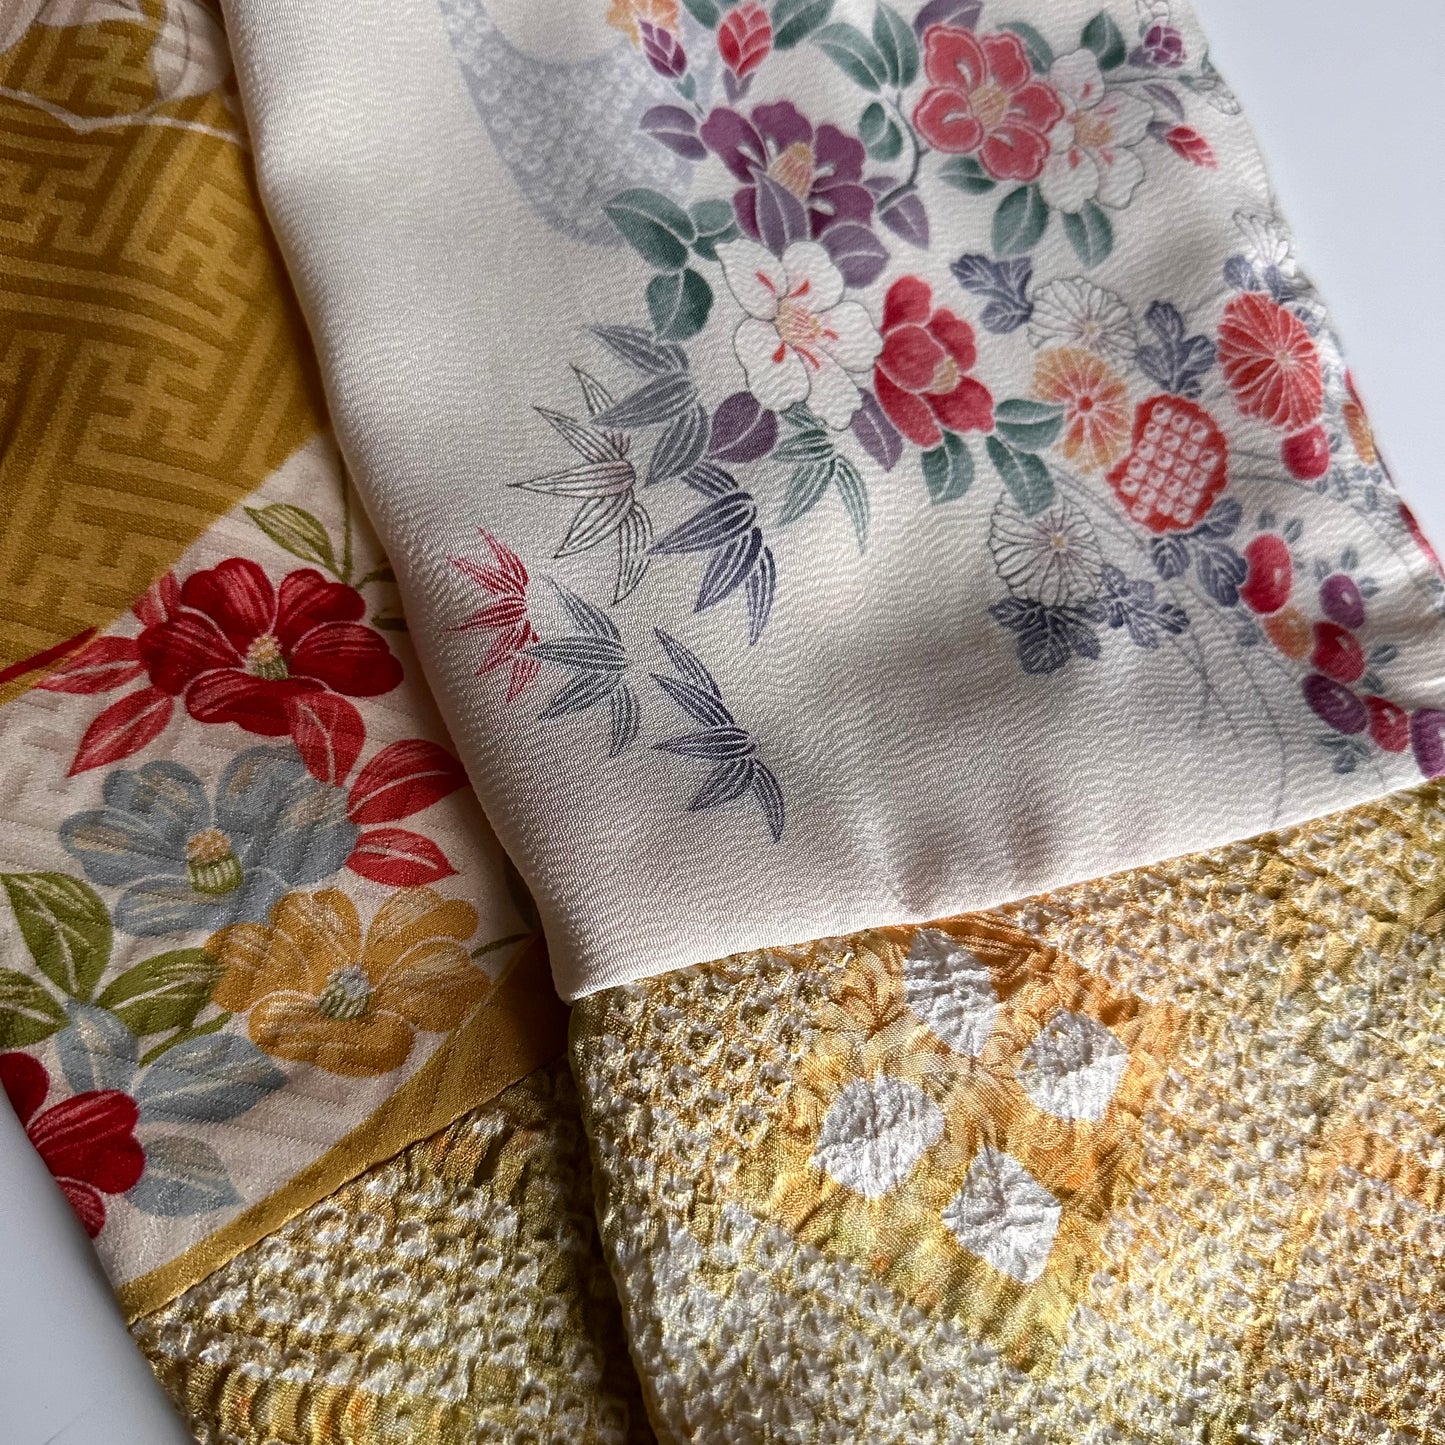 Infinity silk Kimono scarf, Handcrafted, Upcycled, #2051